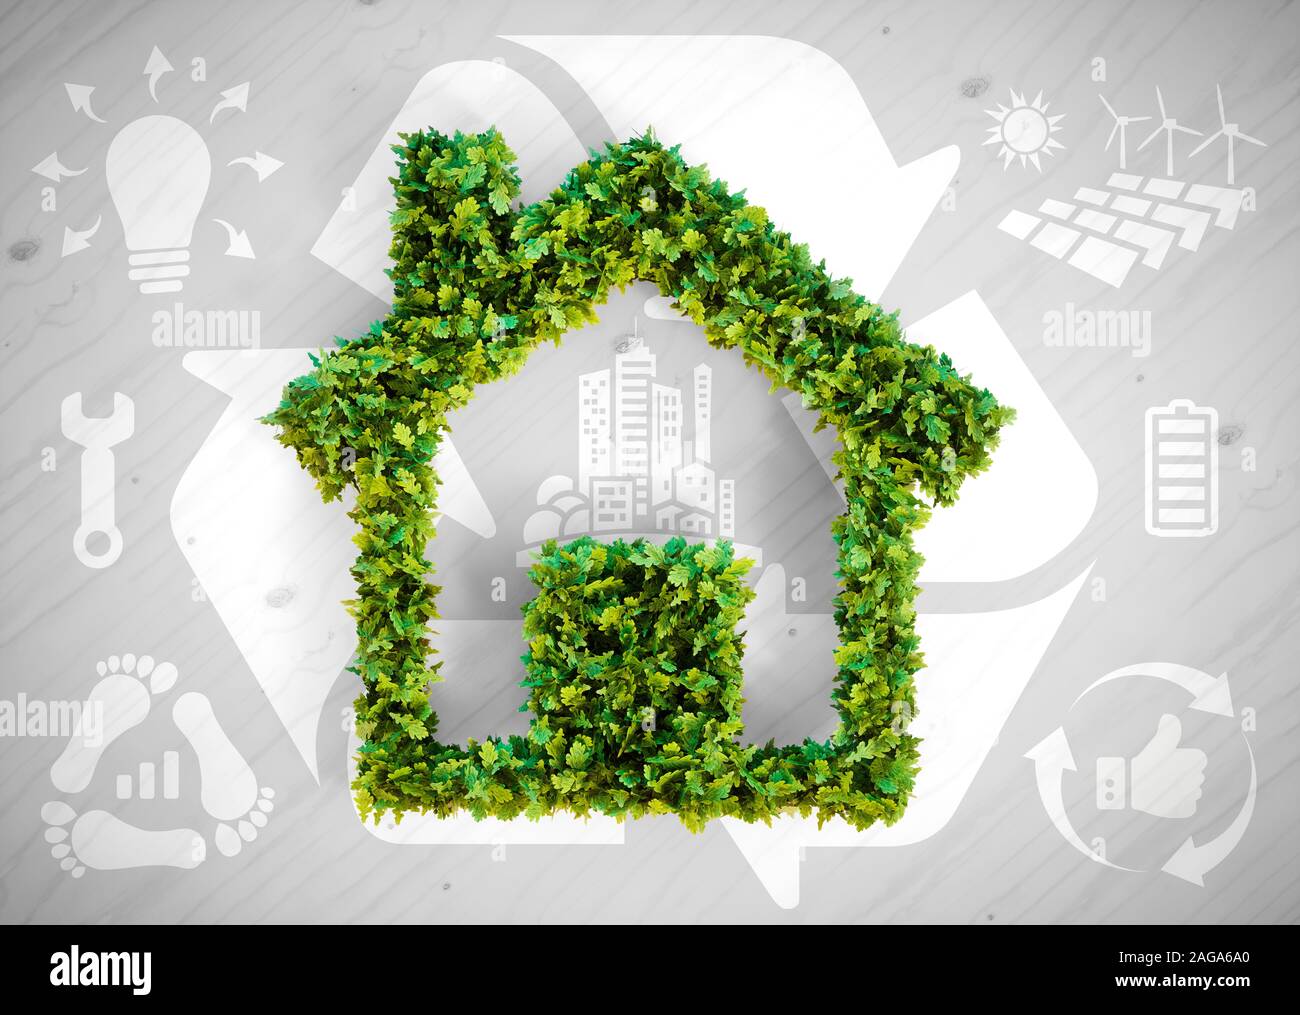 sustainable architecture symbol